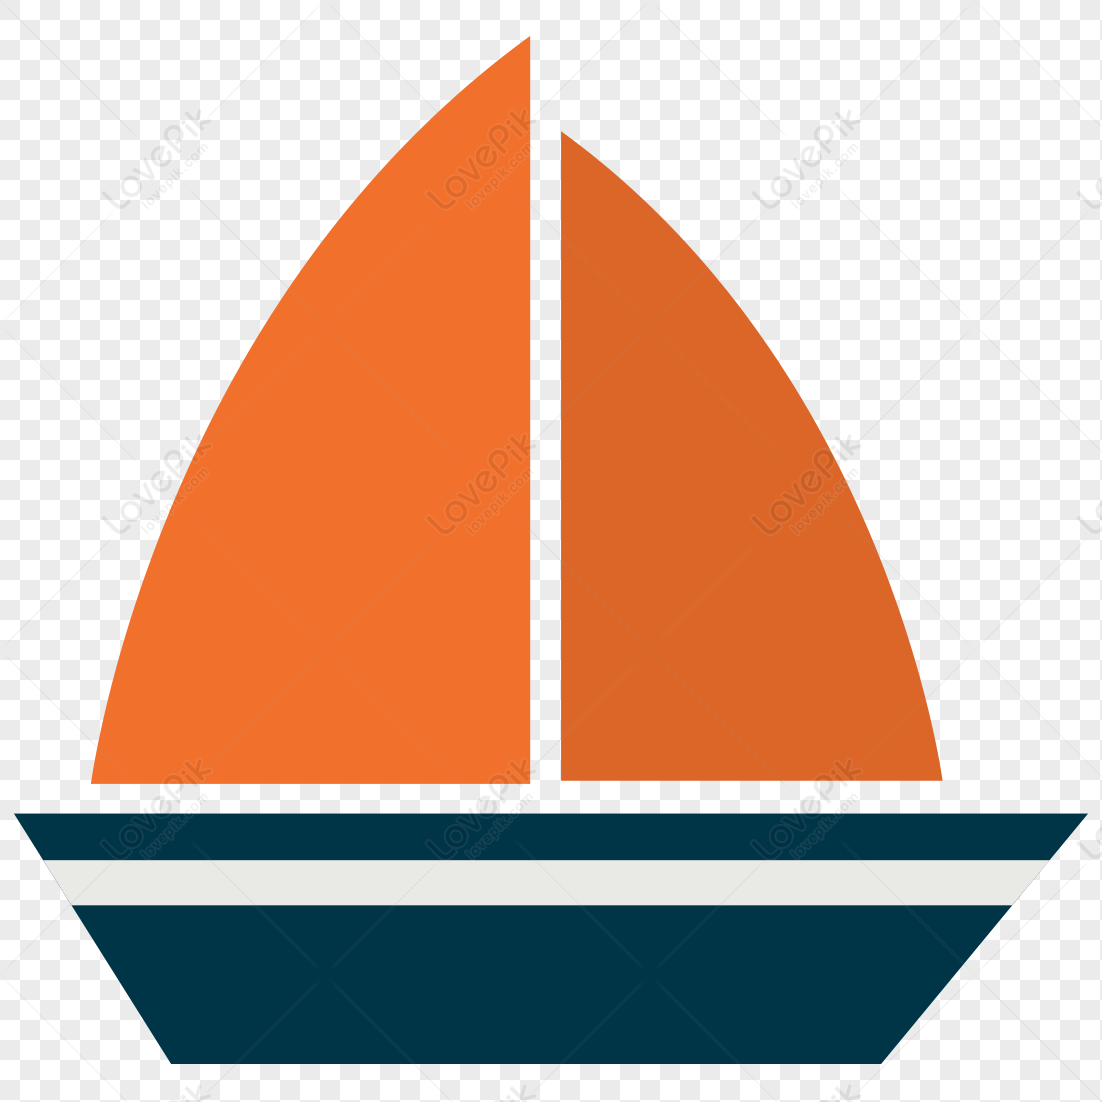 Sailboat, orange shapes, blue sail, blue icon png free download